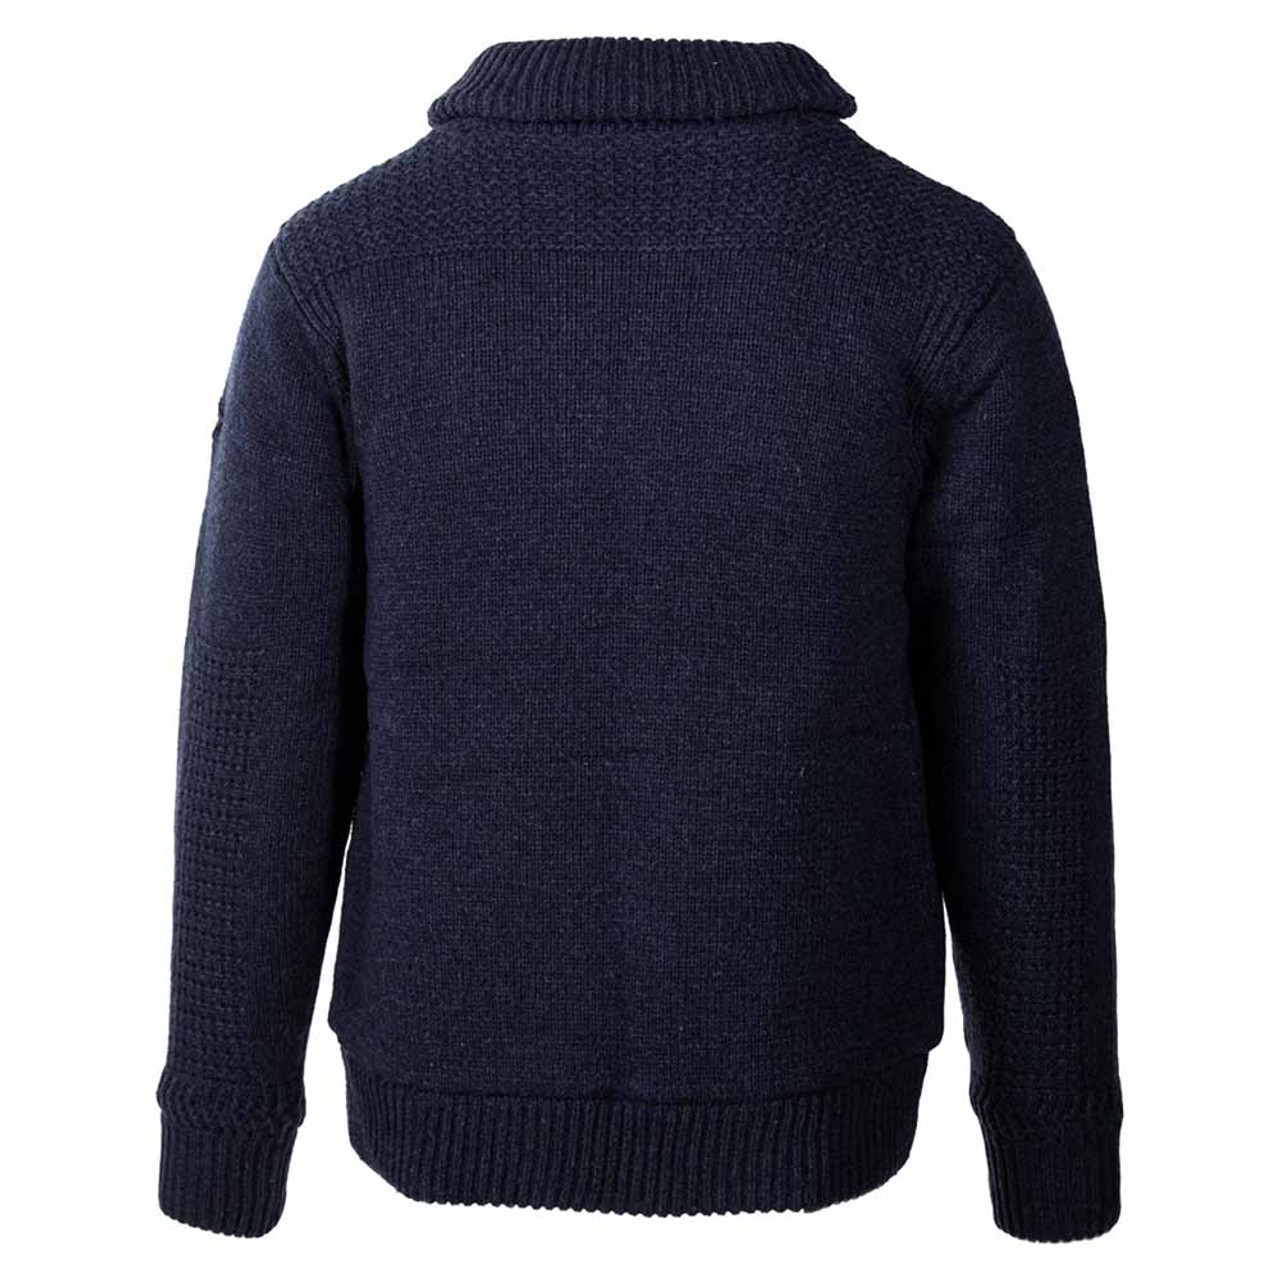 Wool/Nylon Sweater Jacket Men's - Schnee